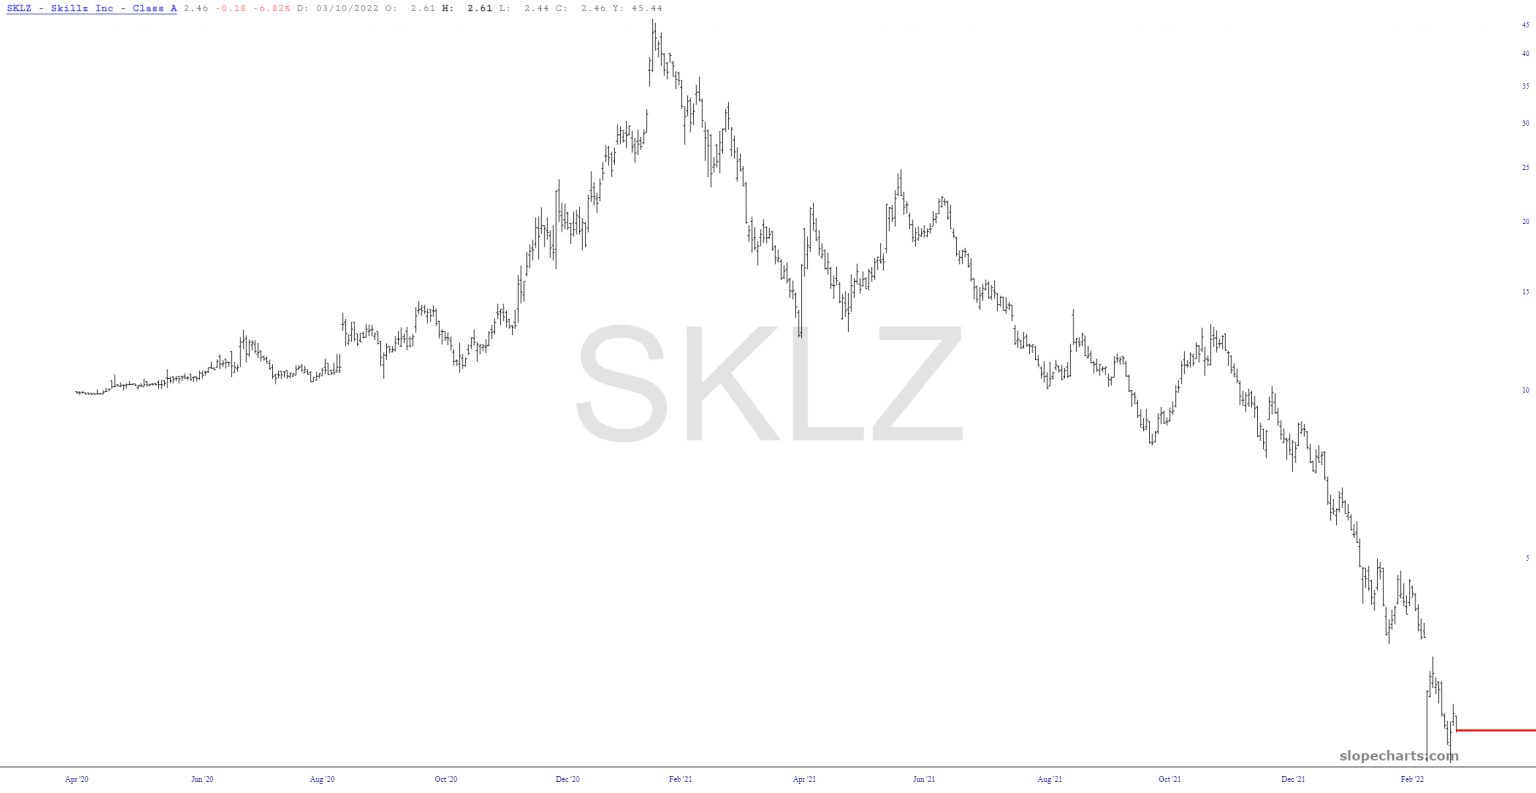 Long-Term SKLZ Chart.